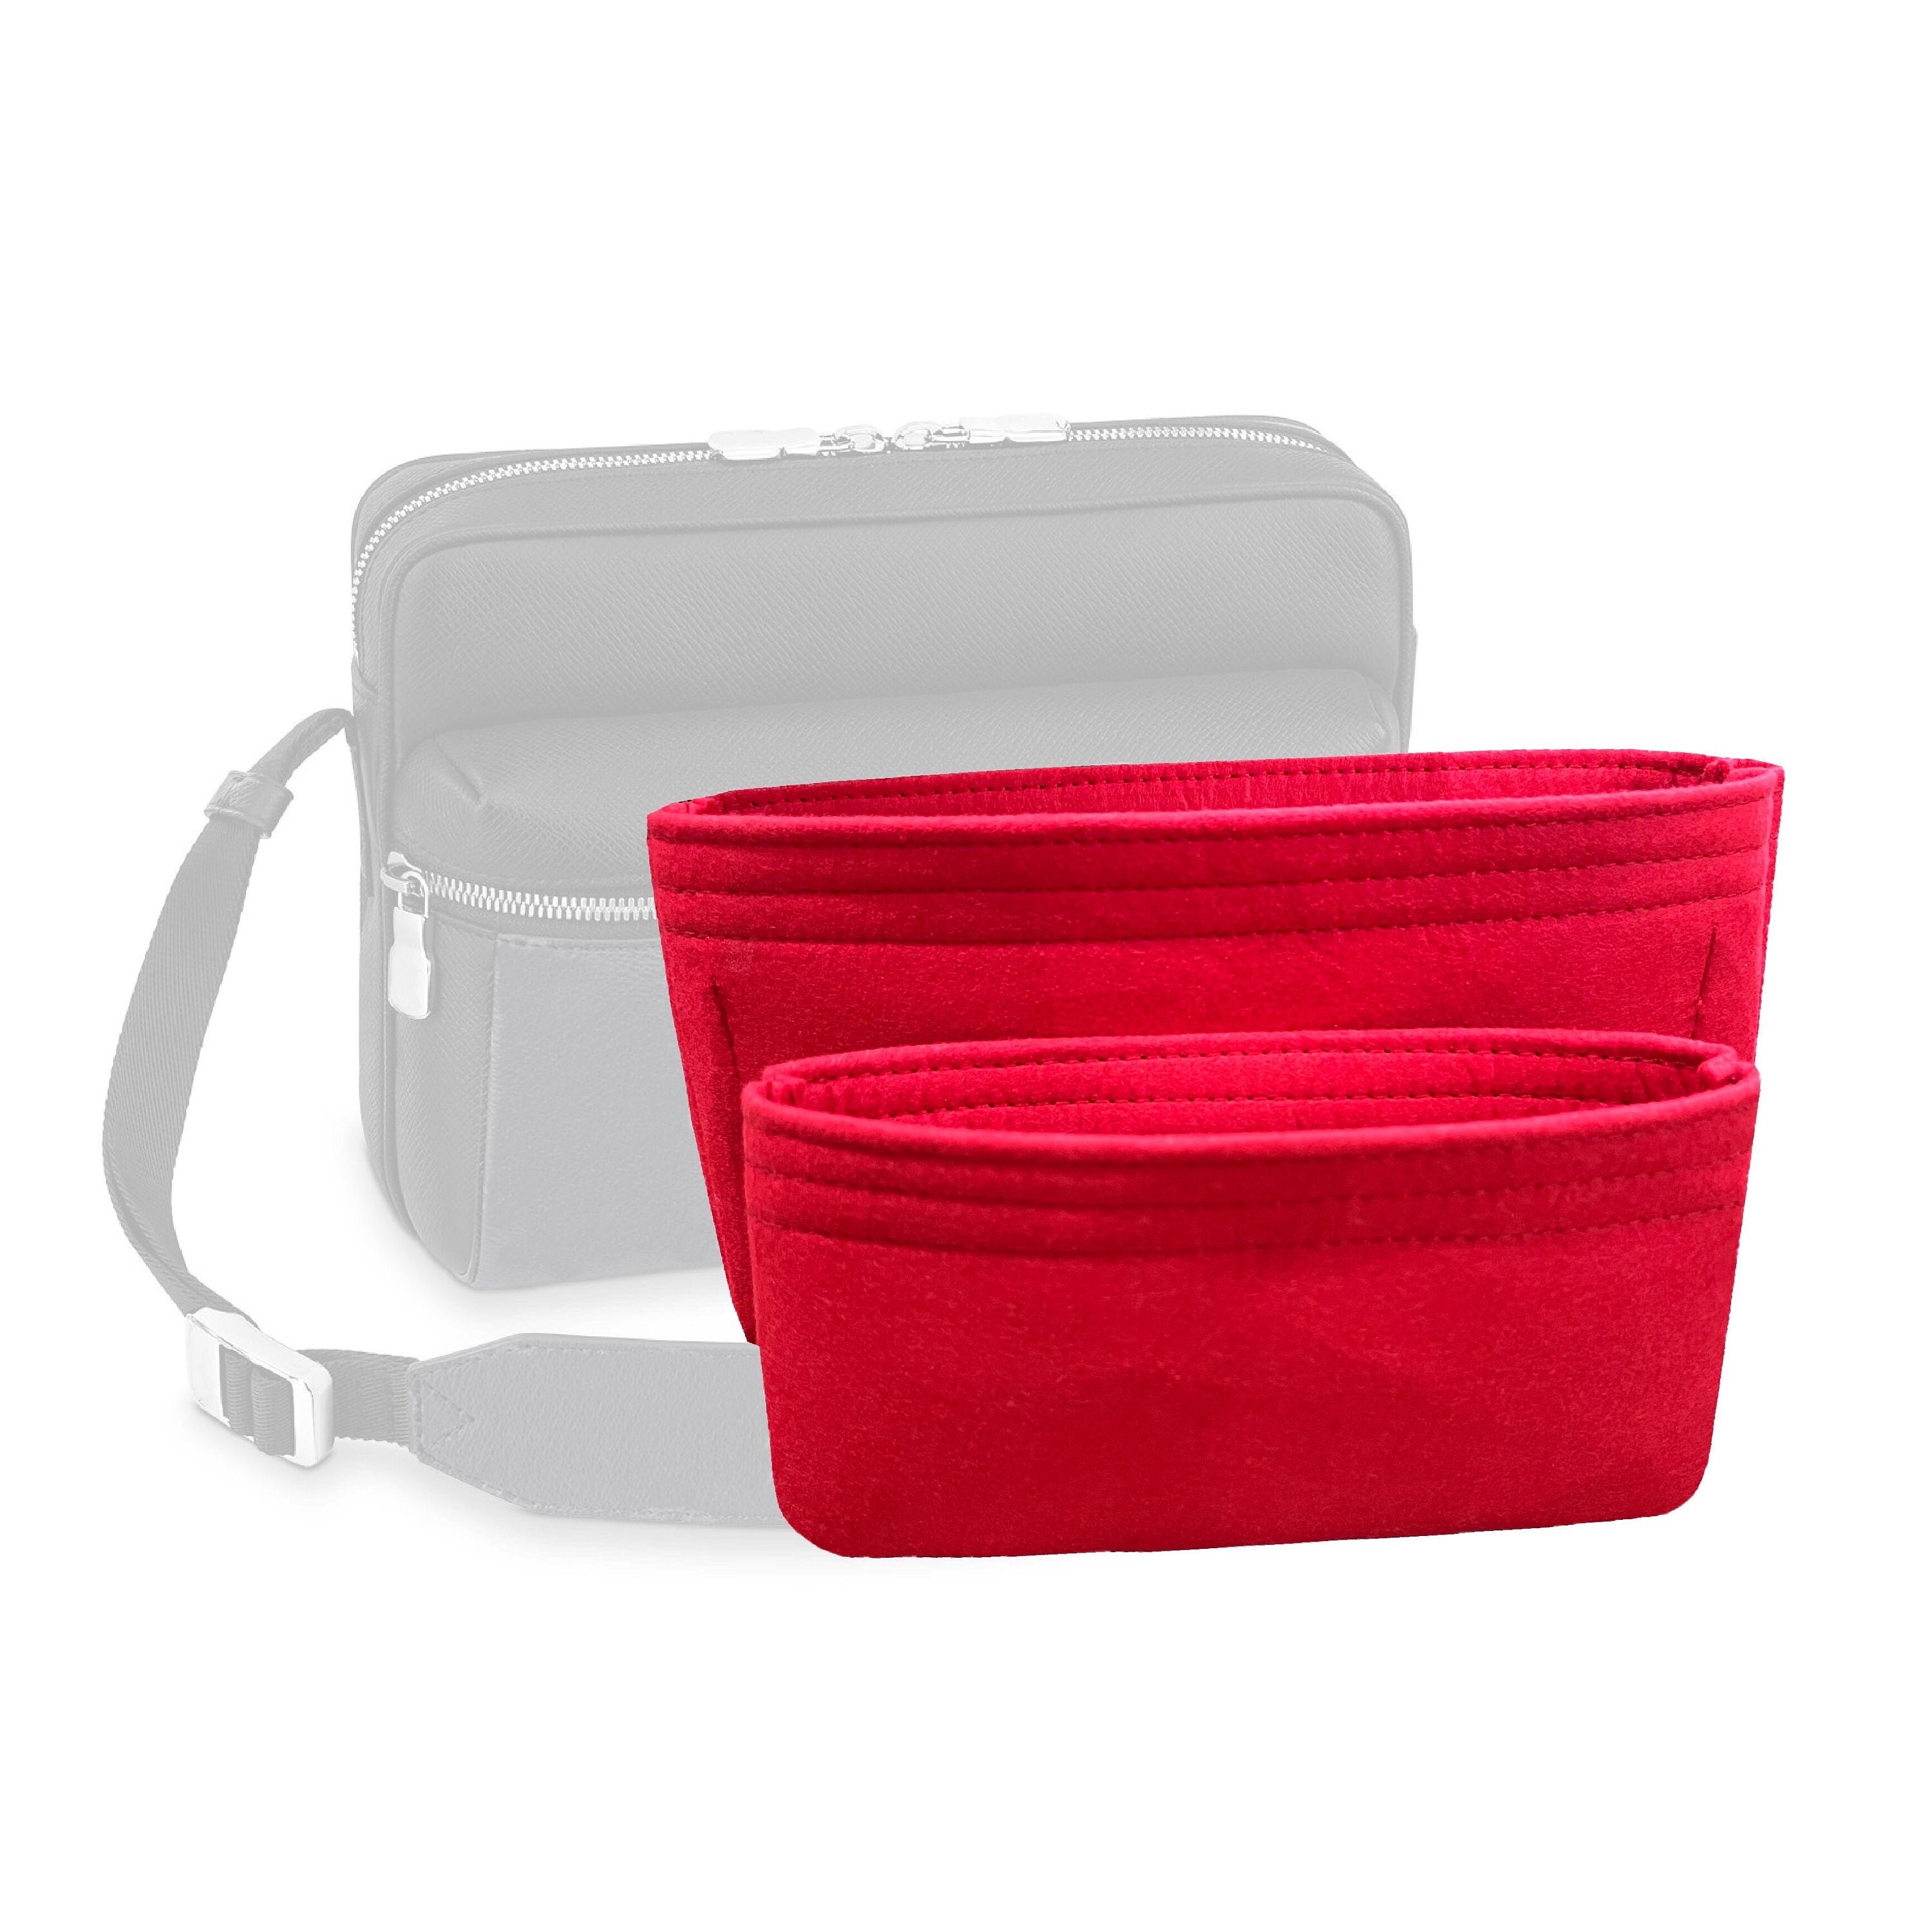 Fits For Pochette Voyage Toiletry Insert Bag Organizer Makeup Handbag  Organizer Portable Cosmetic Bag Women Luxury Bag Organizer